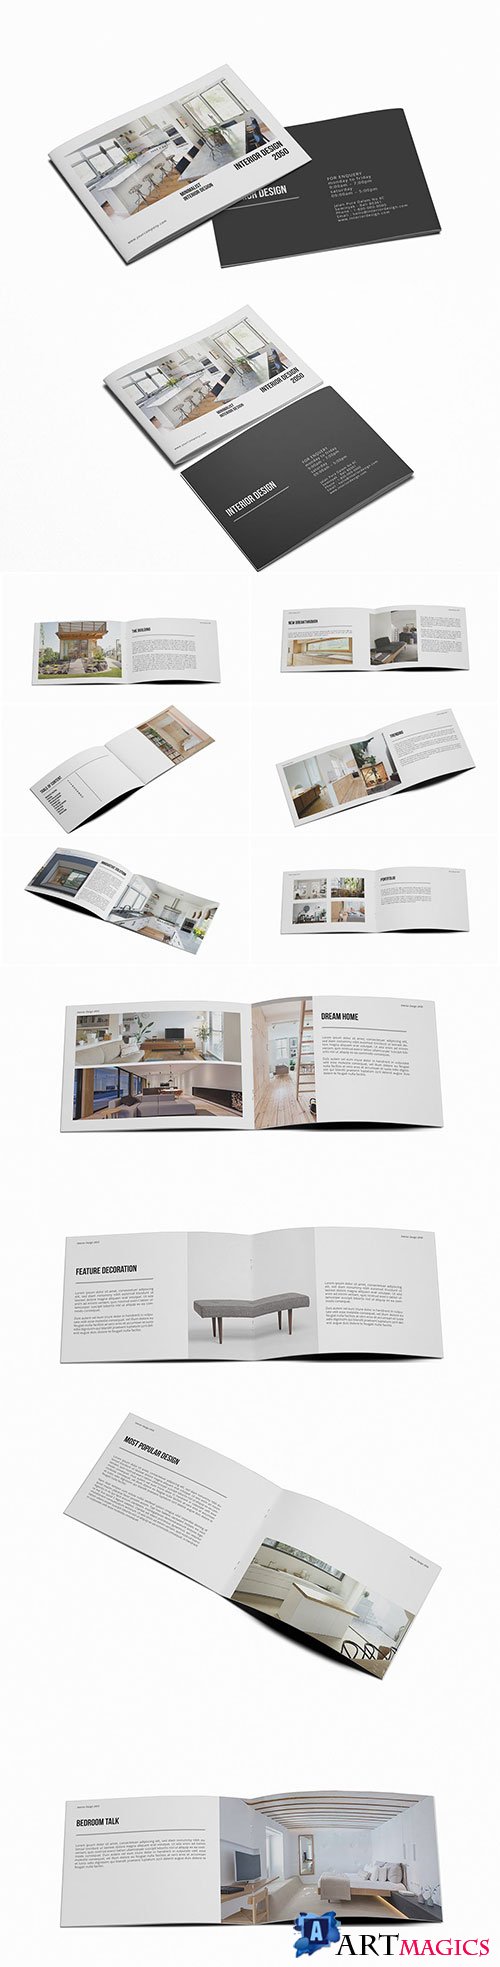 Interior Design Brochure #2